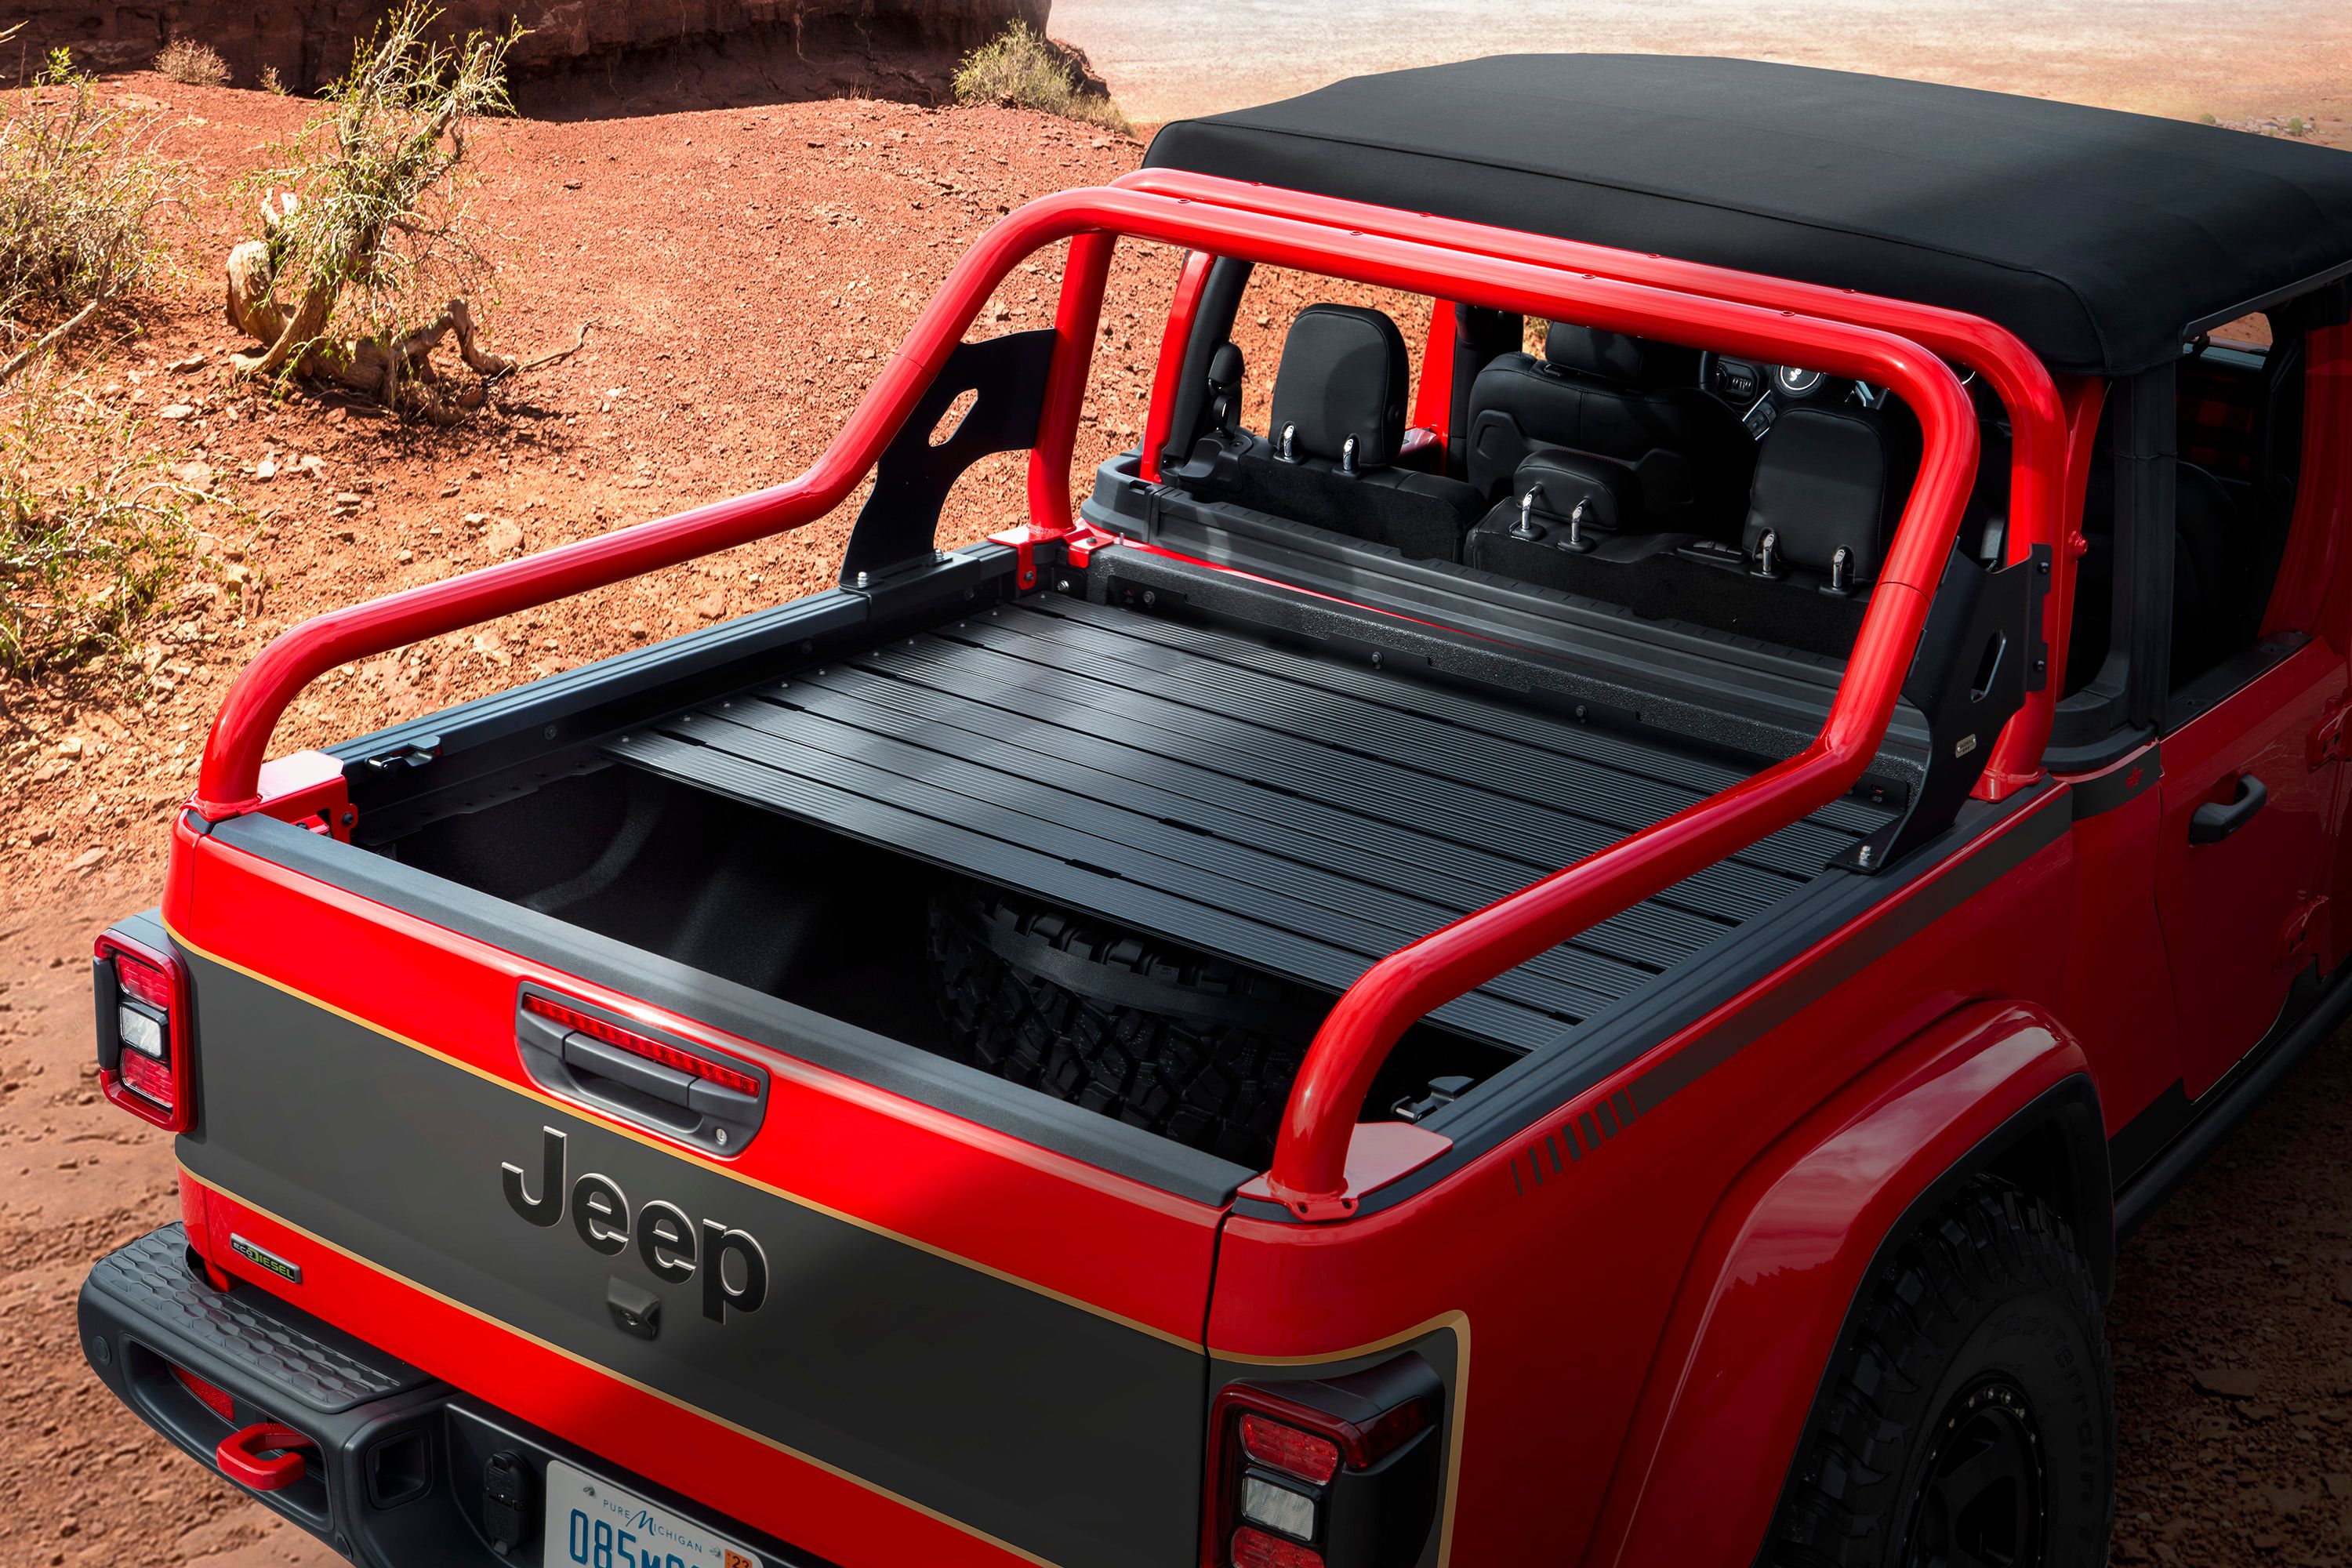 2021 Easter Jeep Safari Concepts